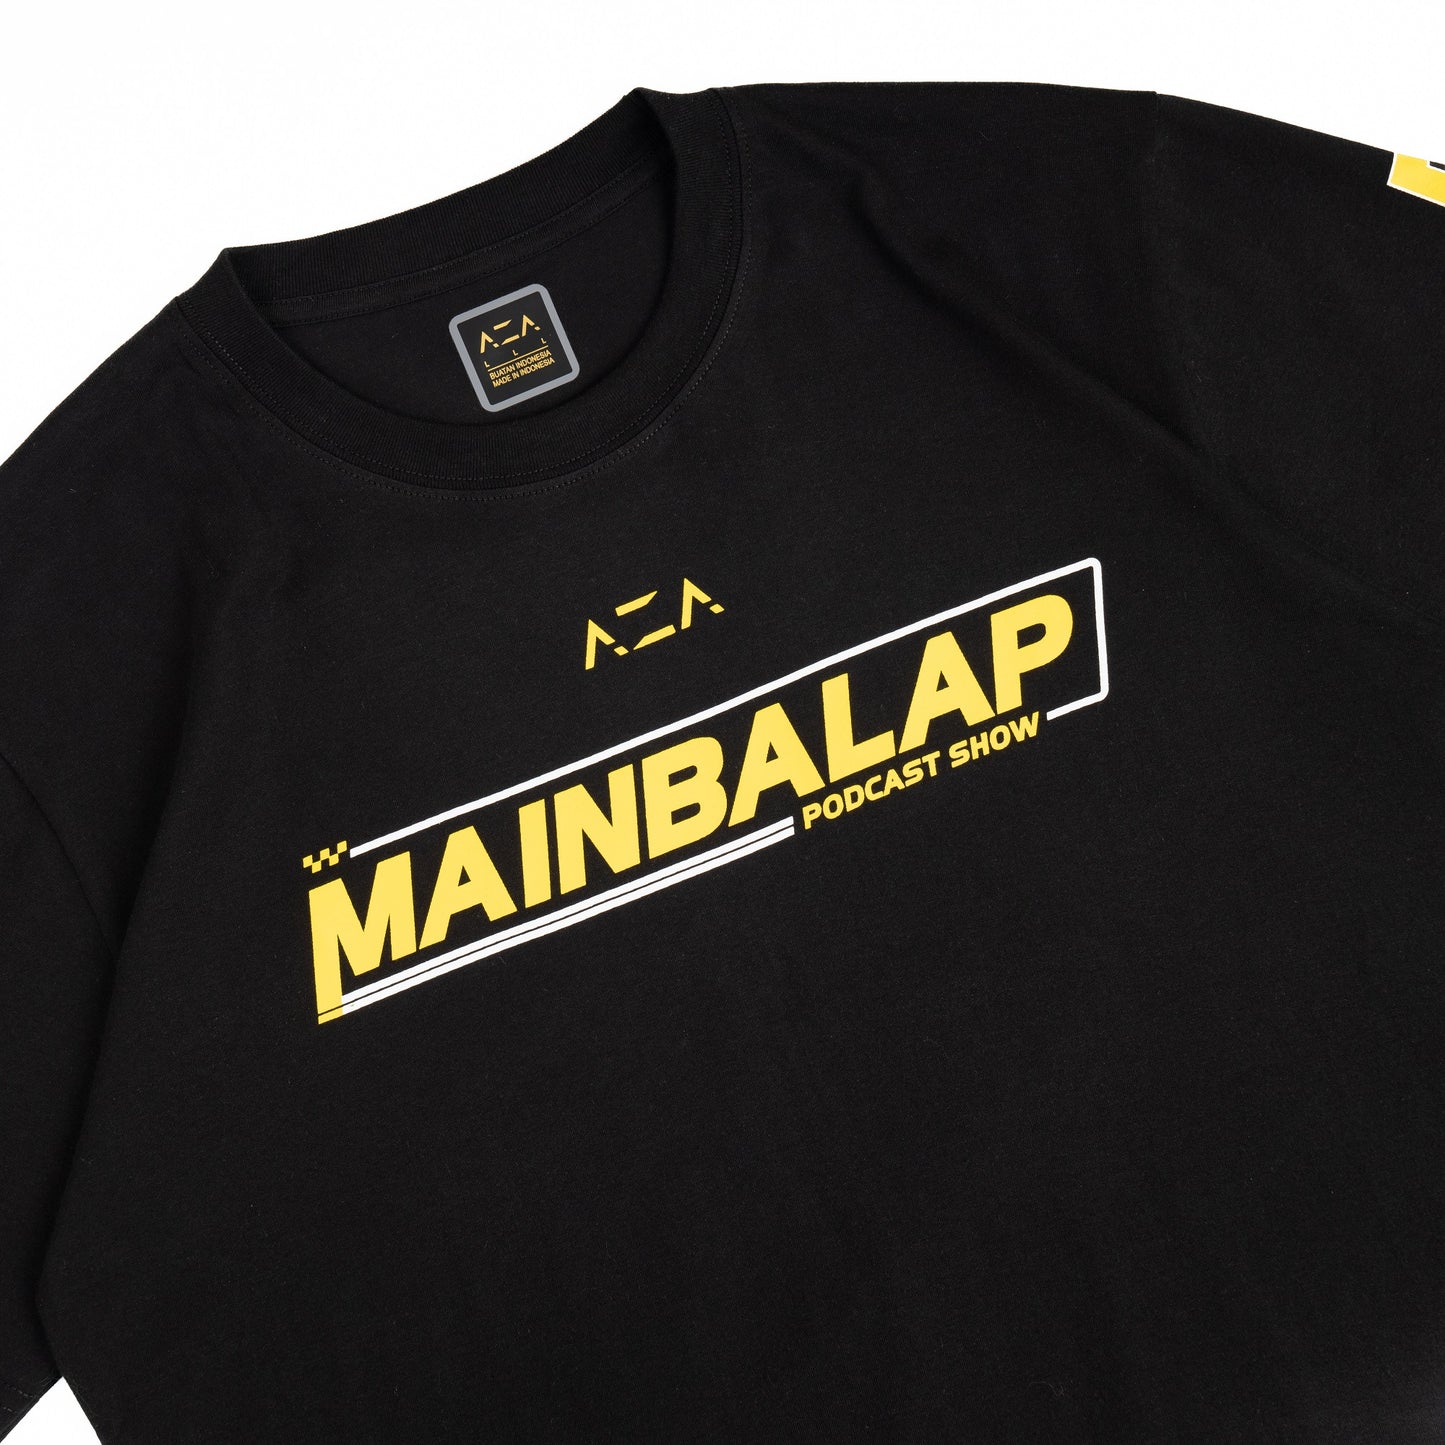 AZA x MAINBALAP Podcast Show T-Shirt - Black